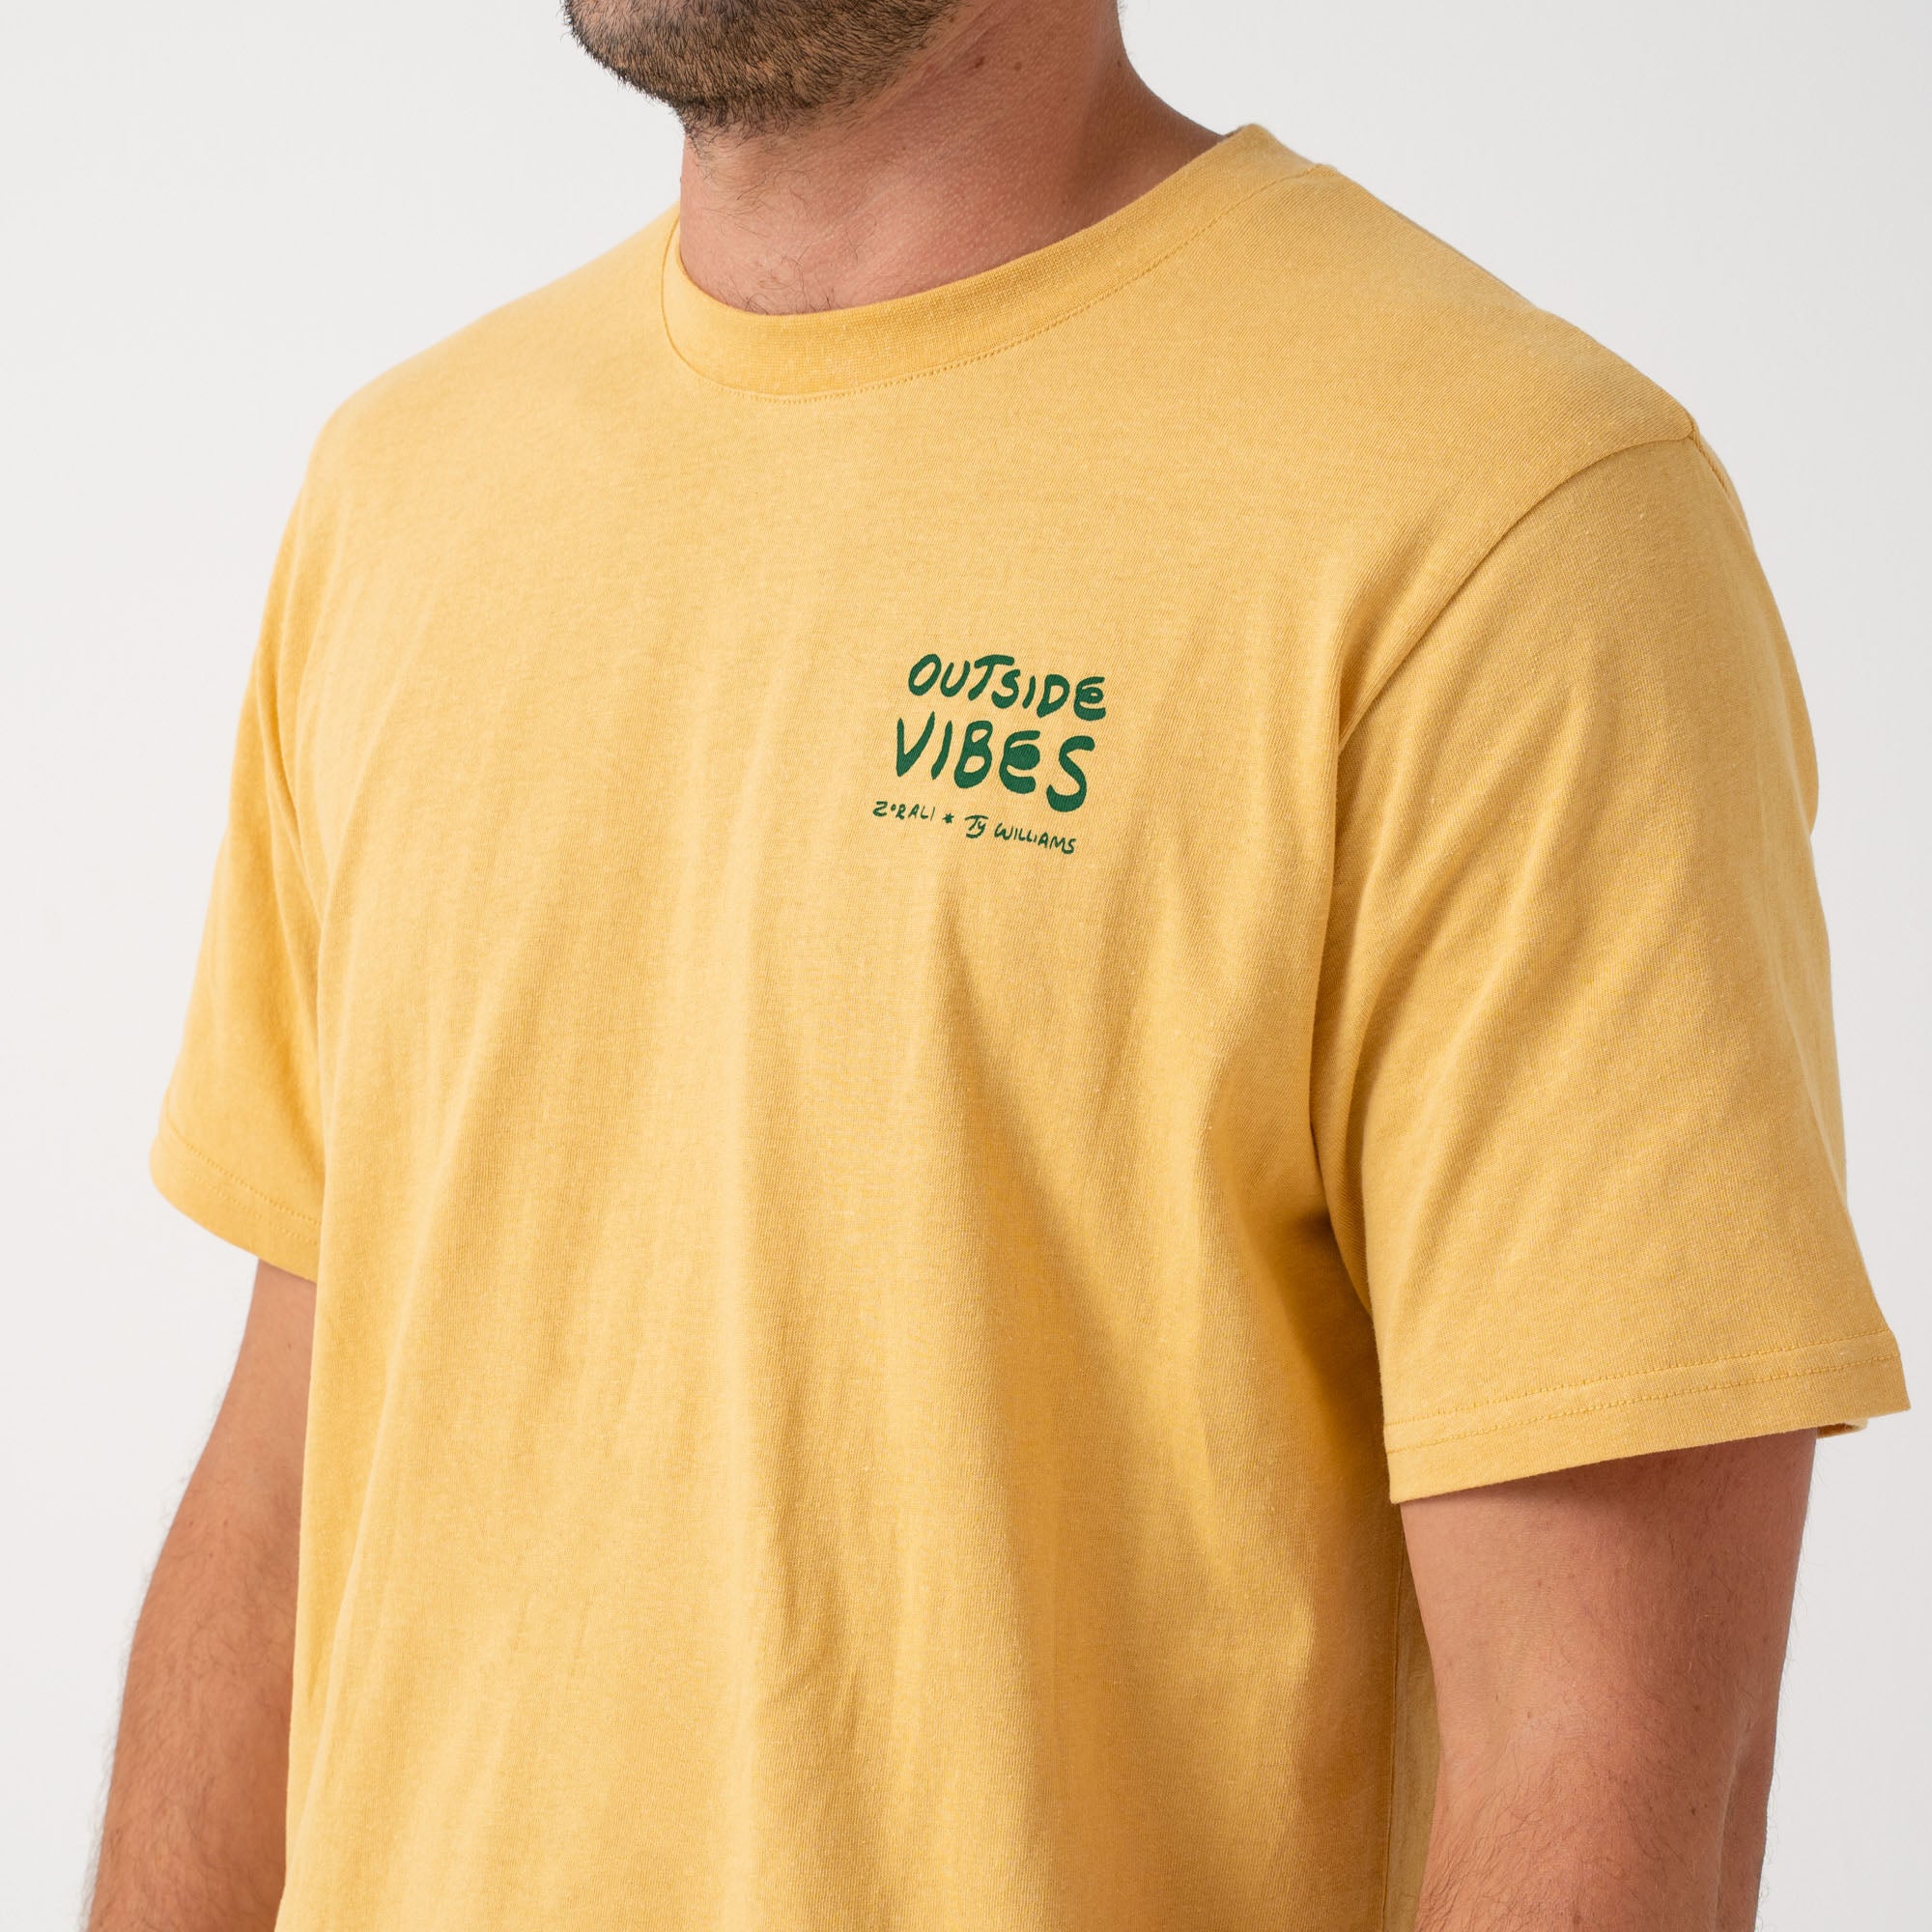 Mens Outside Vibes T-Shirt Sunshine